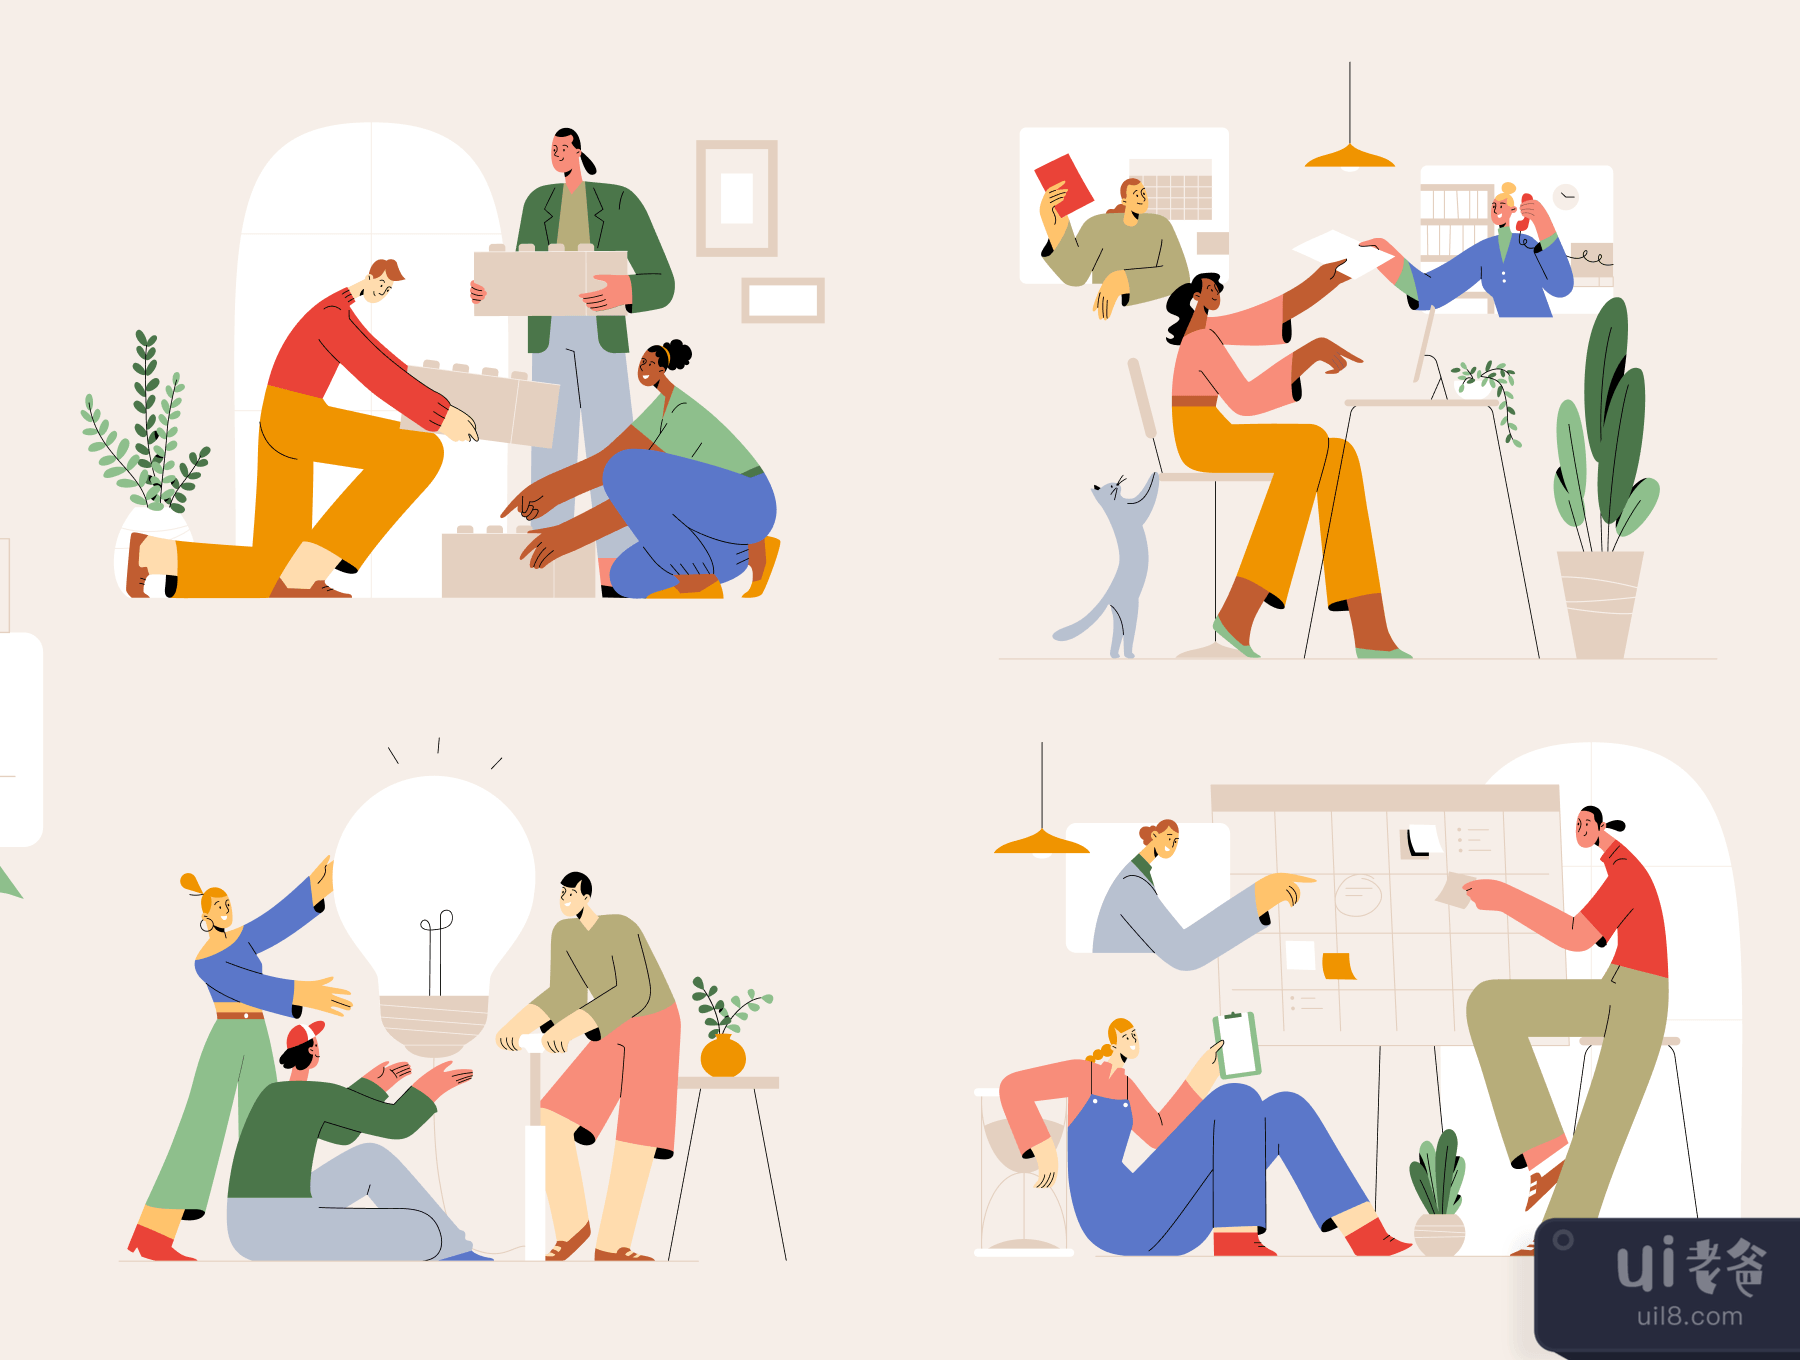 Mately - 团队合作插图 (Mately - Teamwork Illustrations)插图1